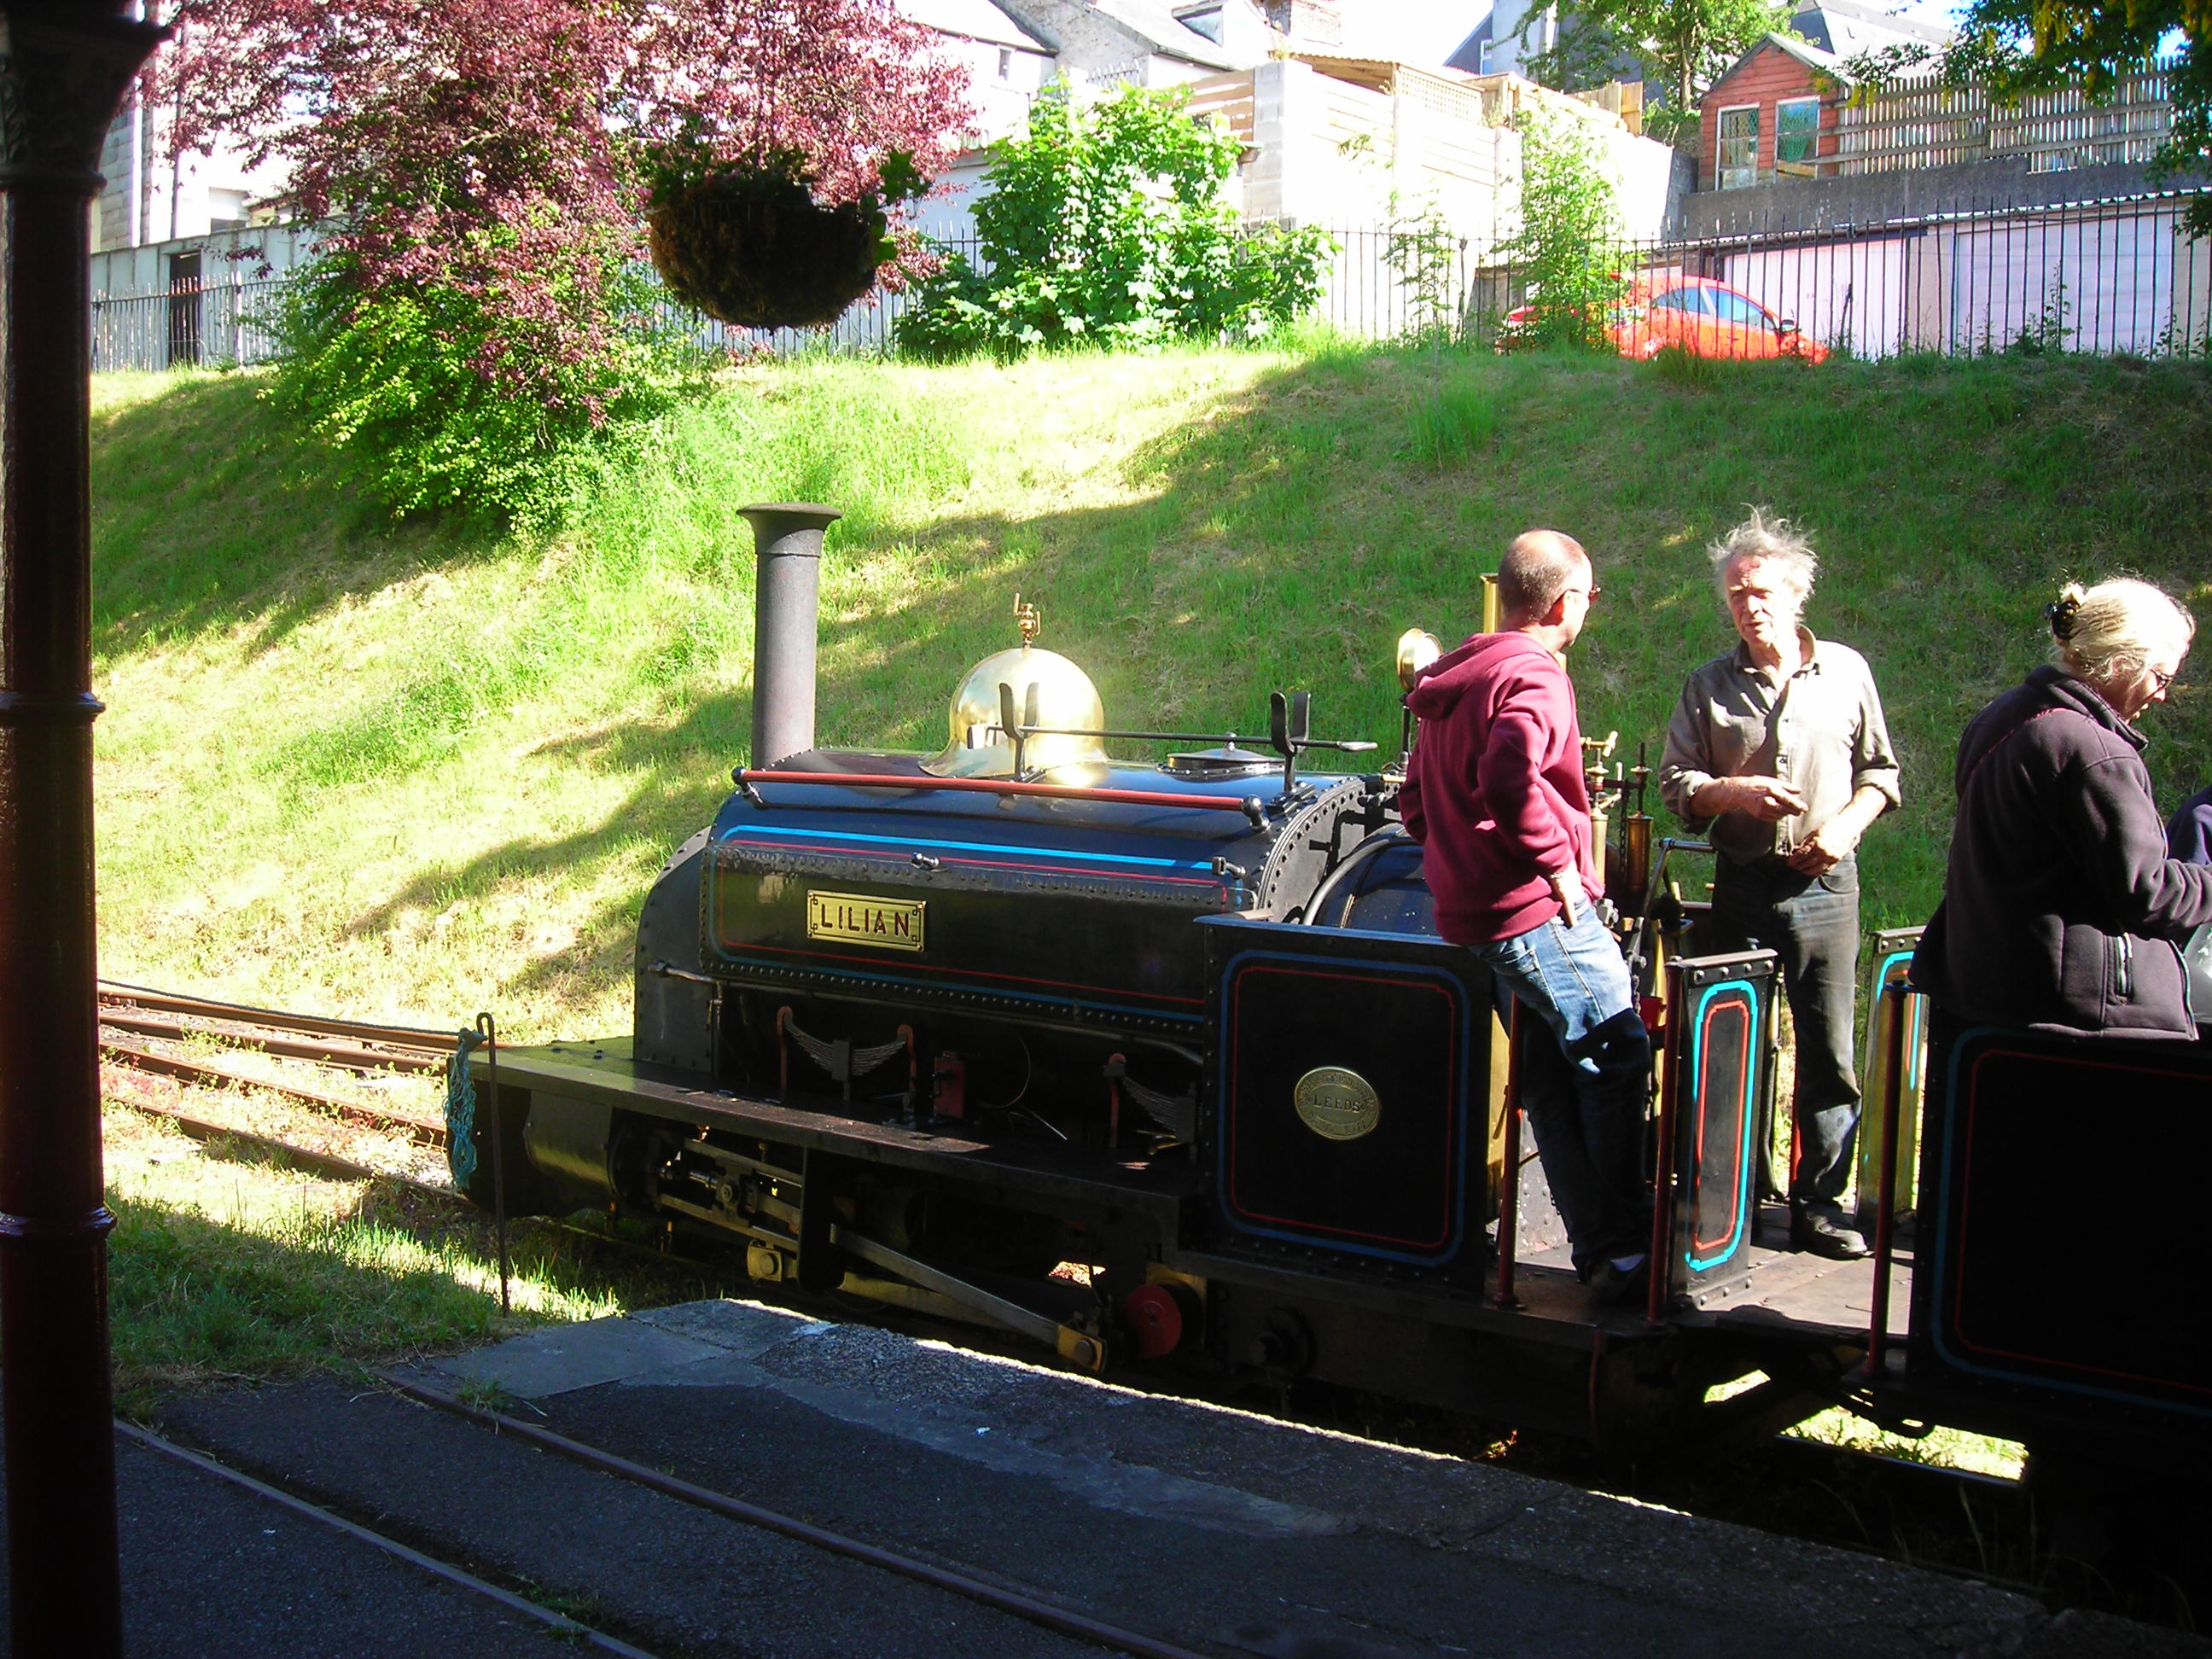 Launceston Steam Railway locomotive